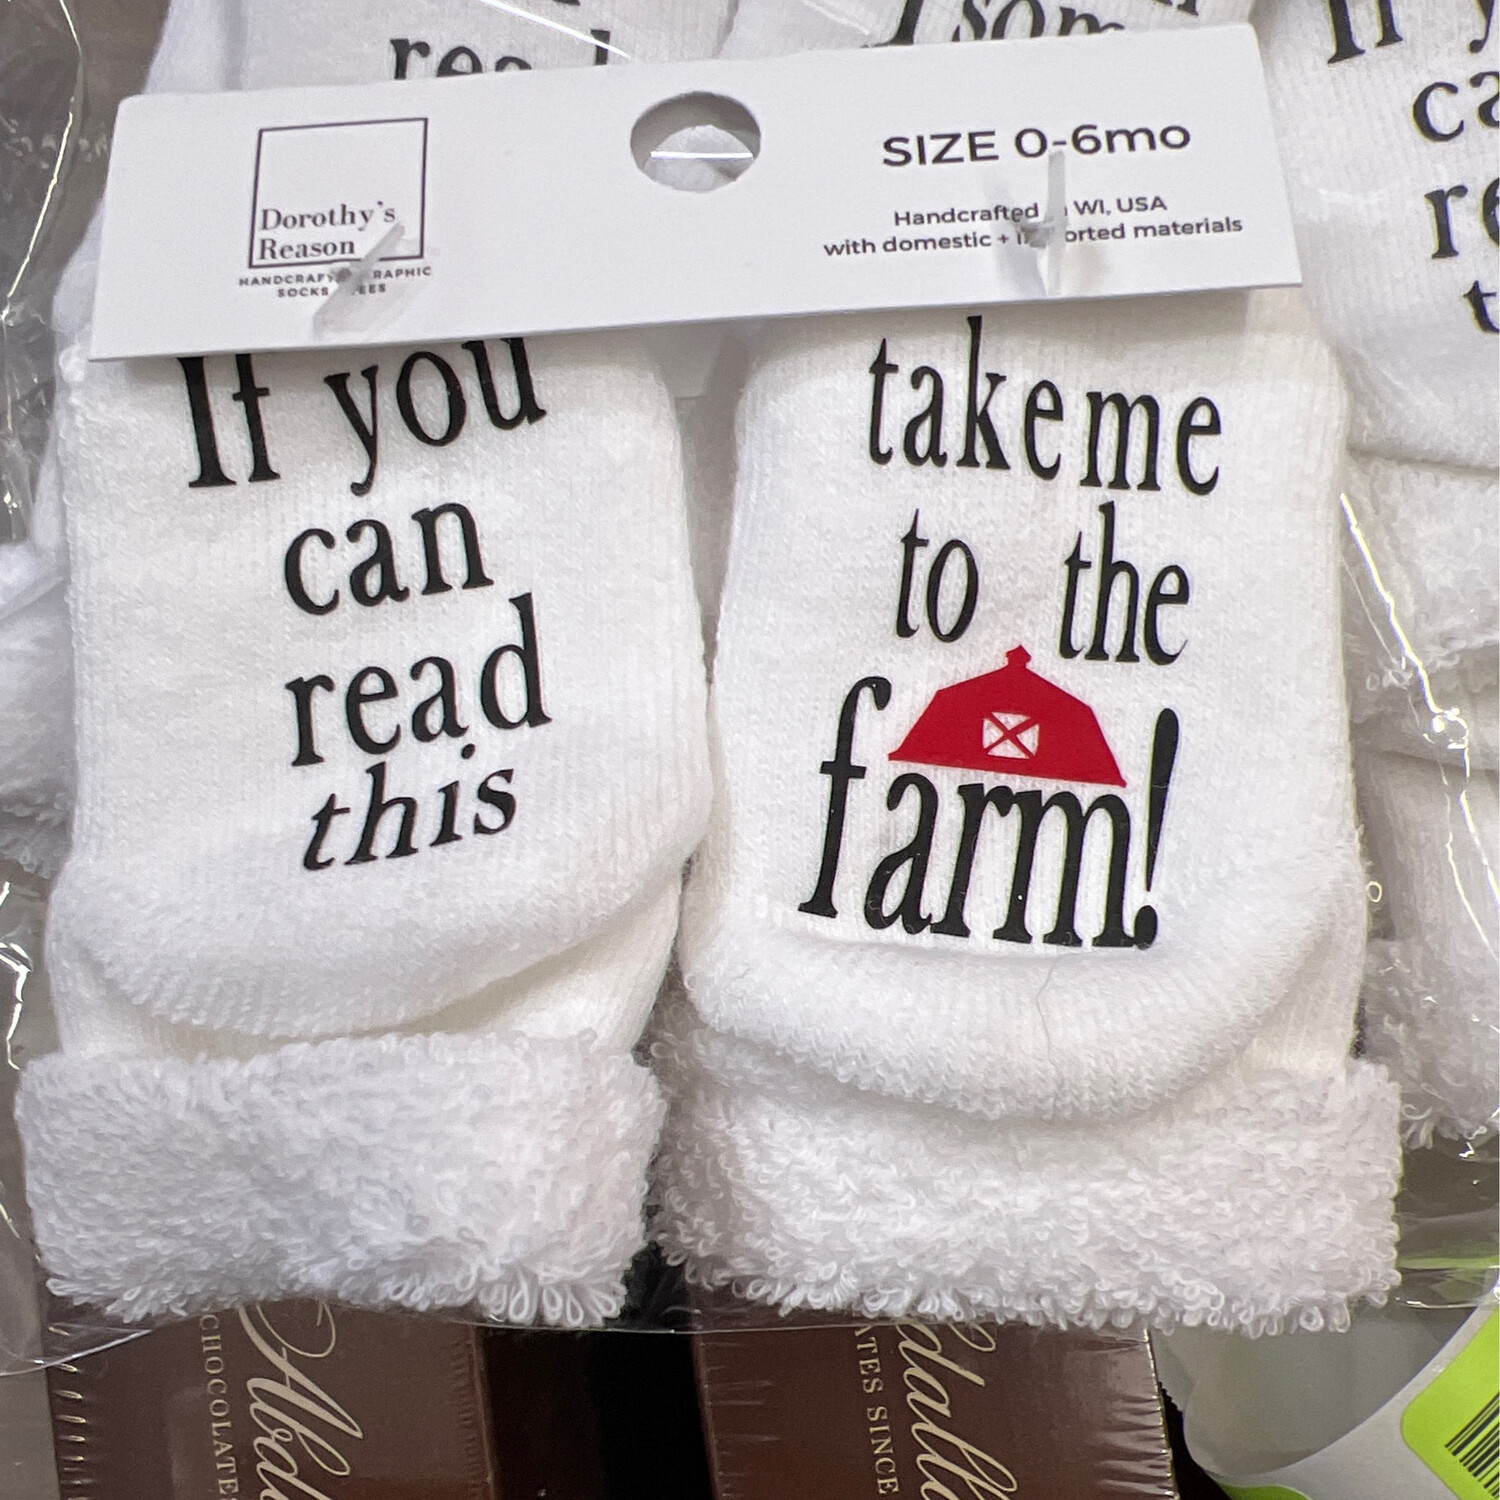 Baby Socks - Take Me To The Farm